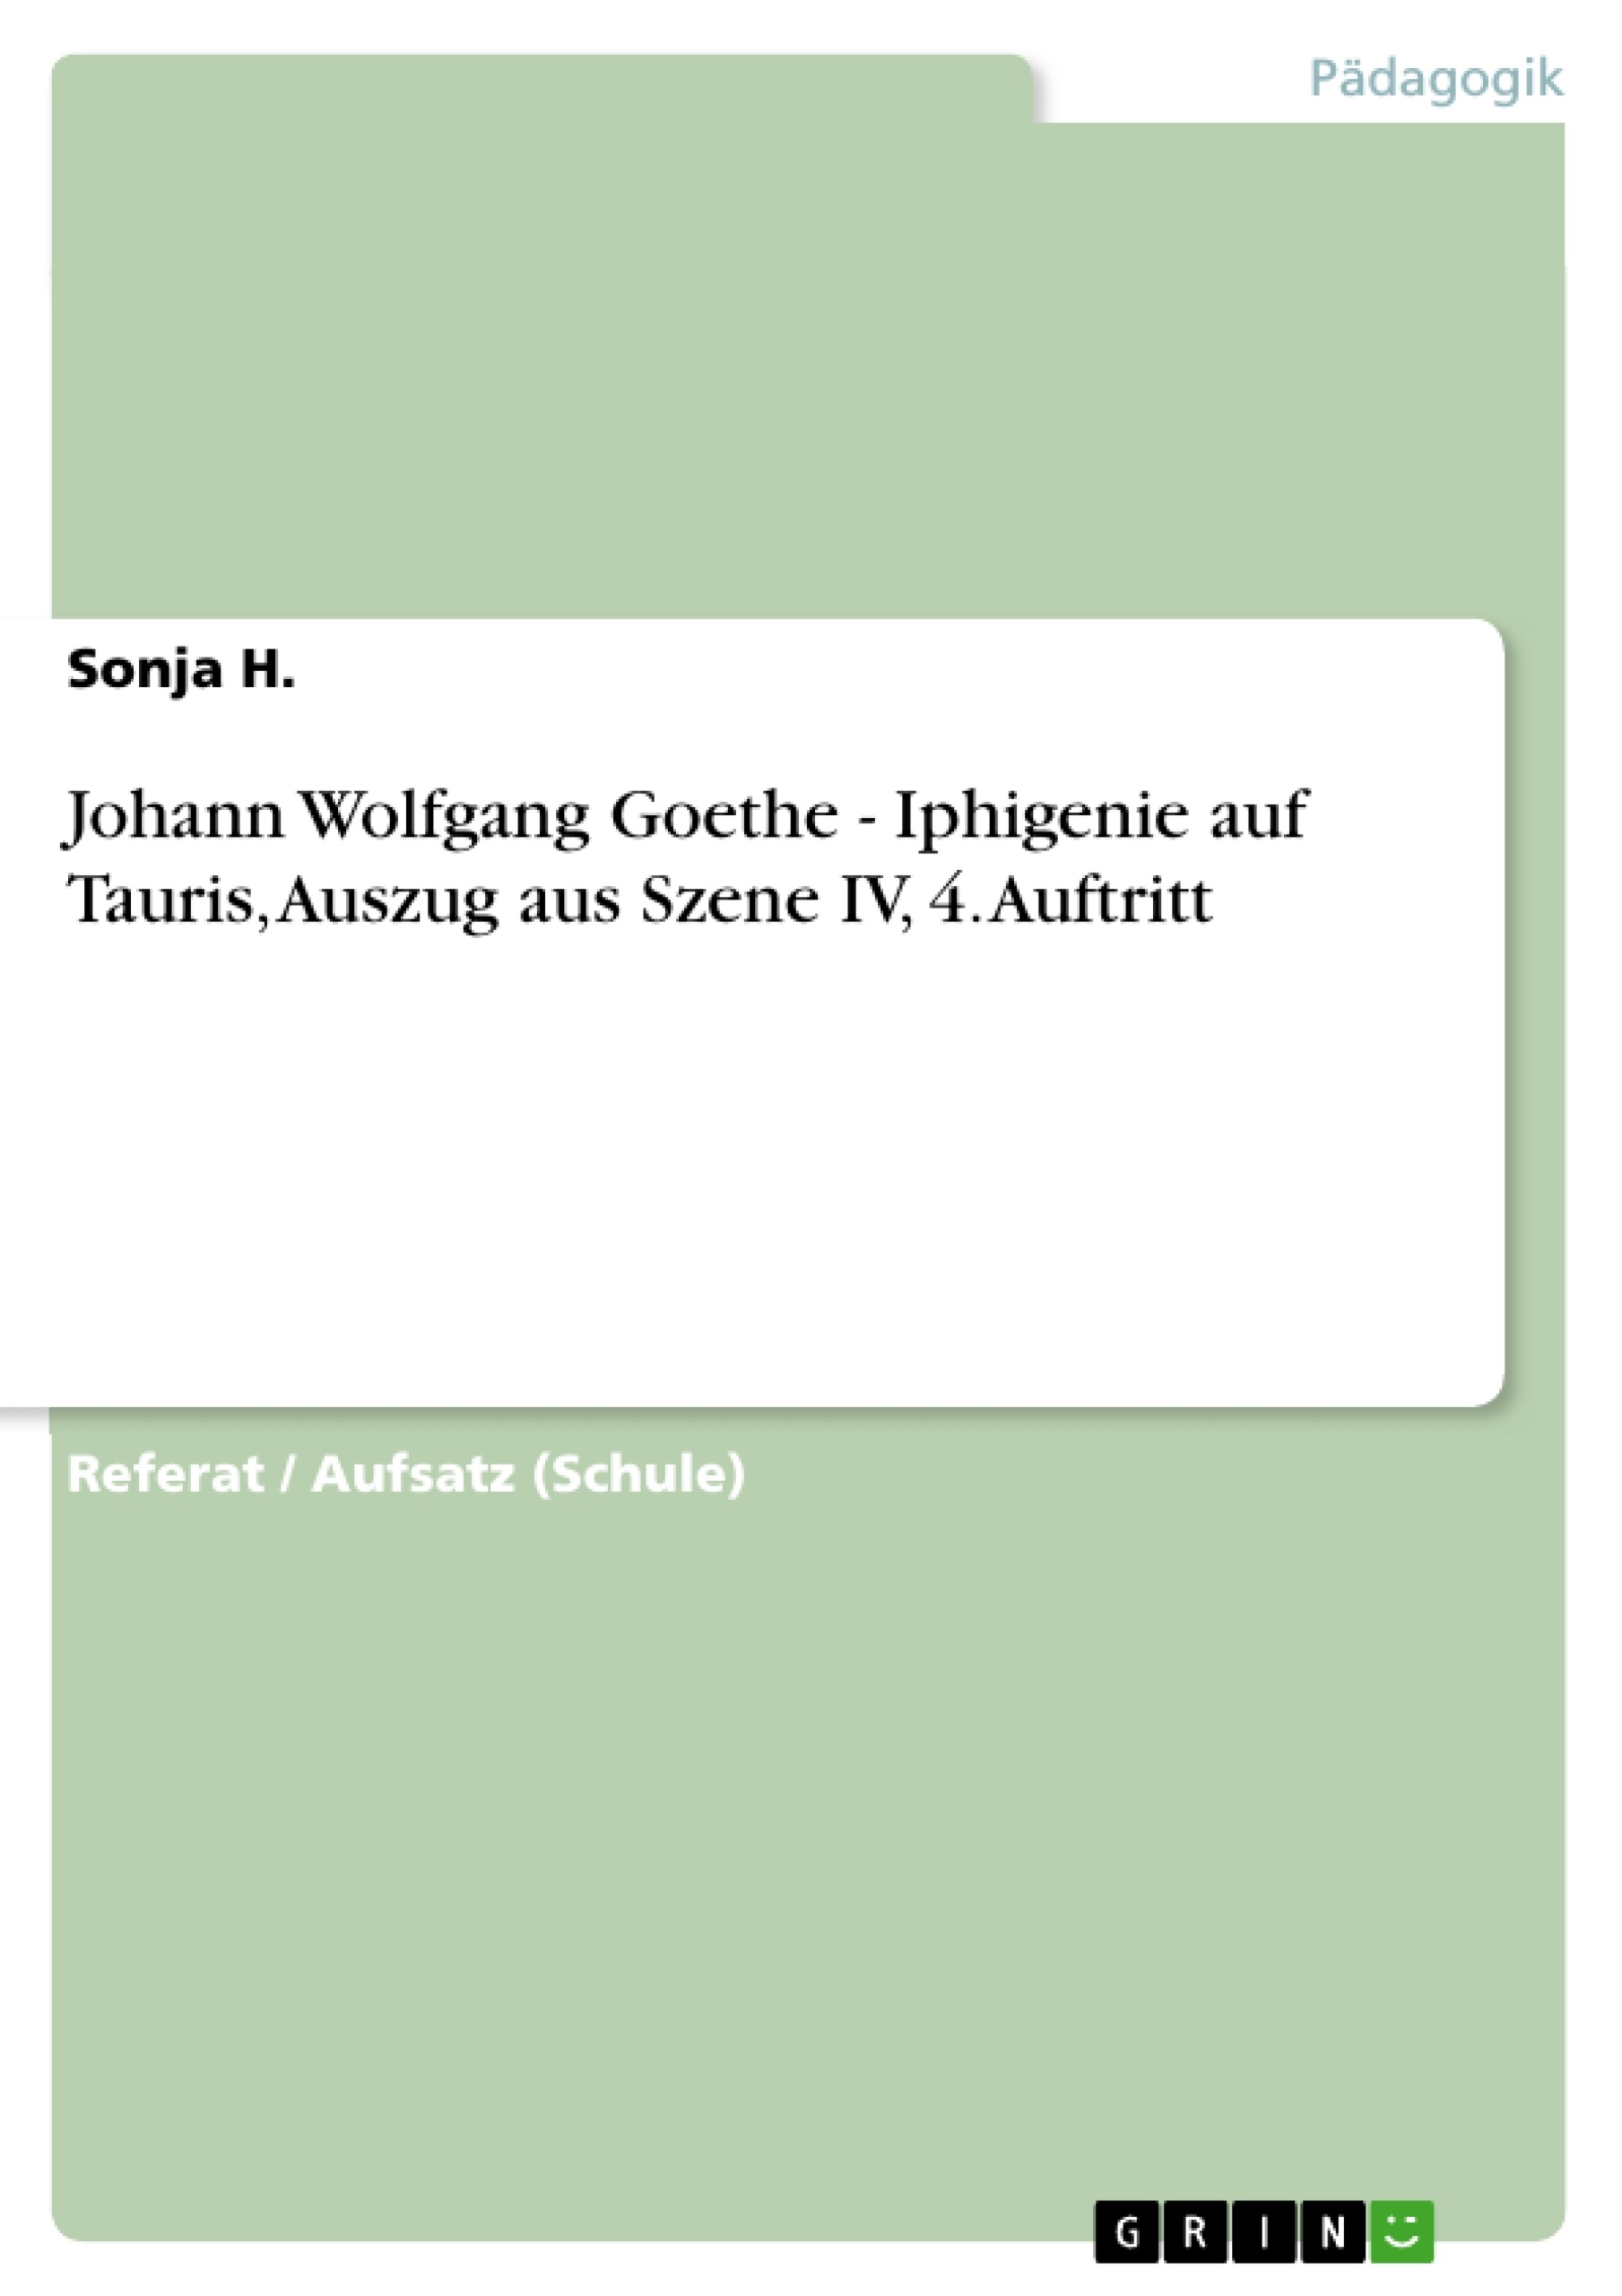 Título: Johann Wolfgang Goethe - Iphigenie auf Tauris, Auszug aus Szene IV, 4. Auftritt